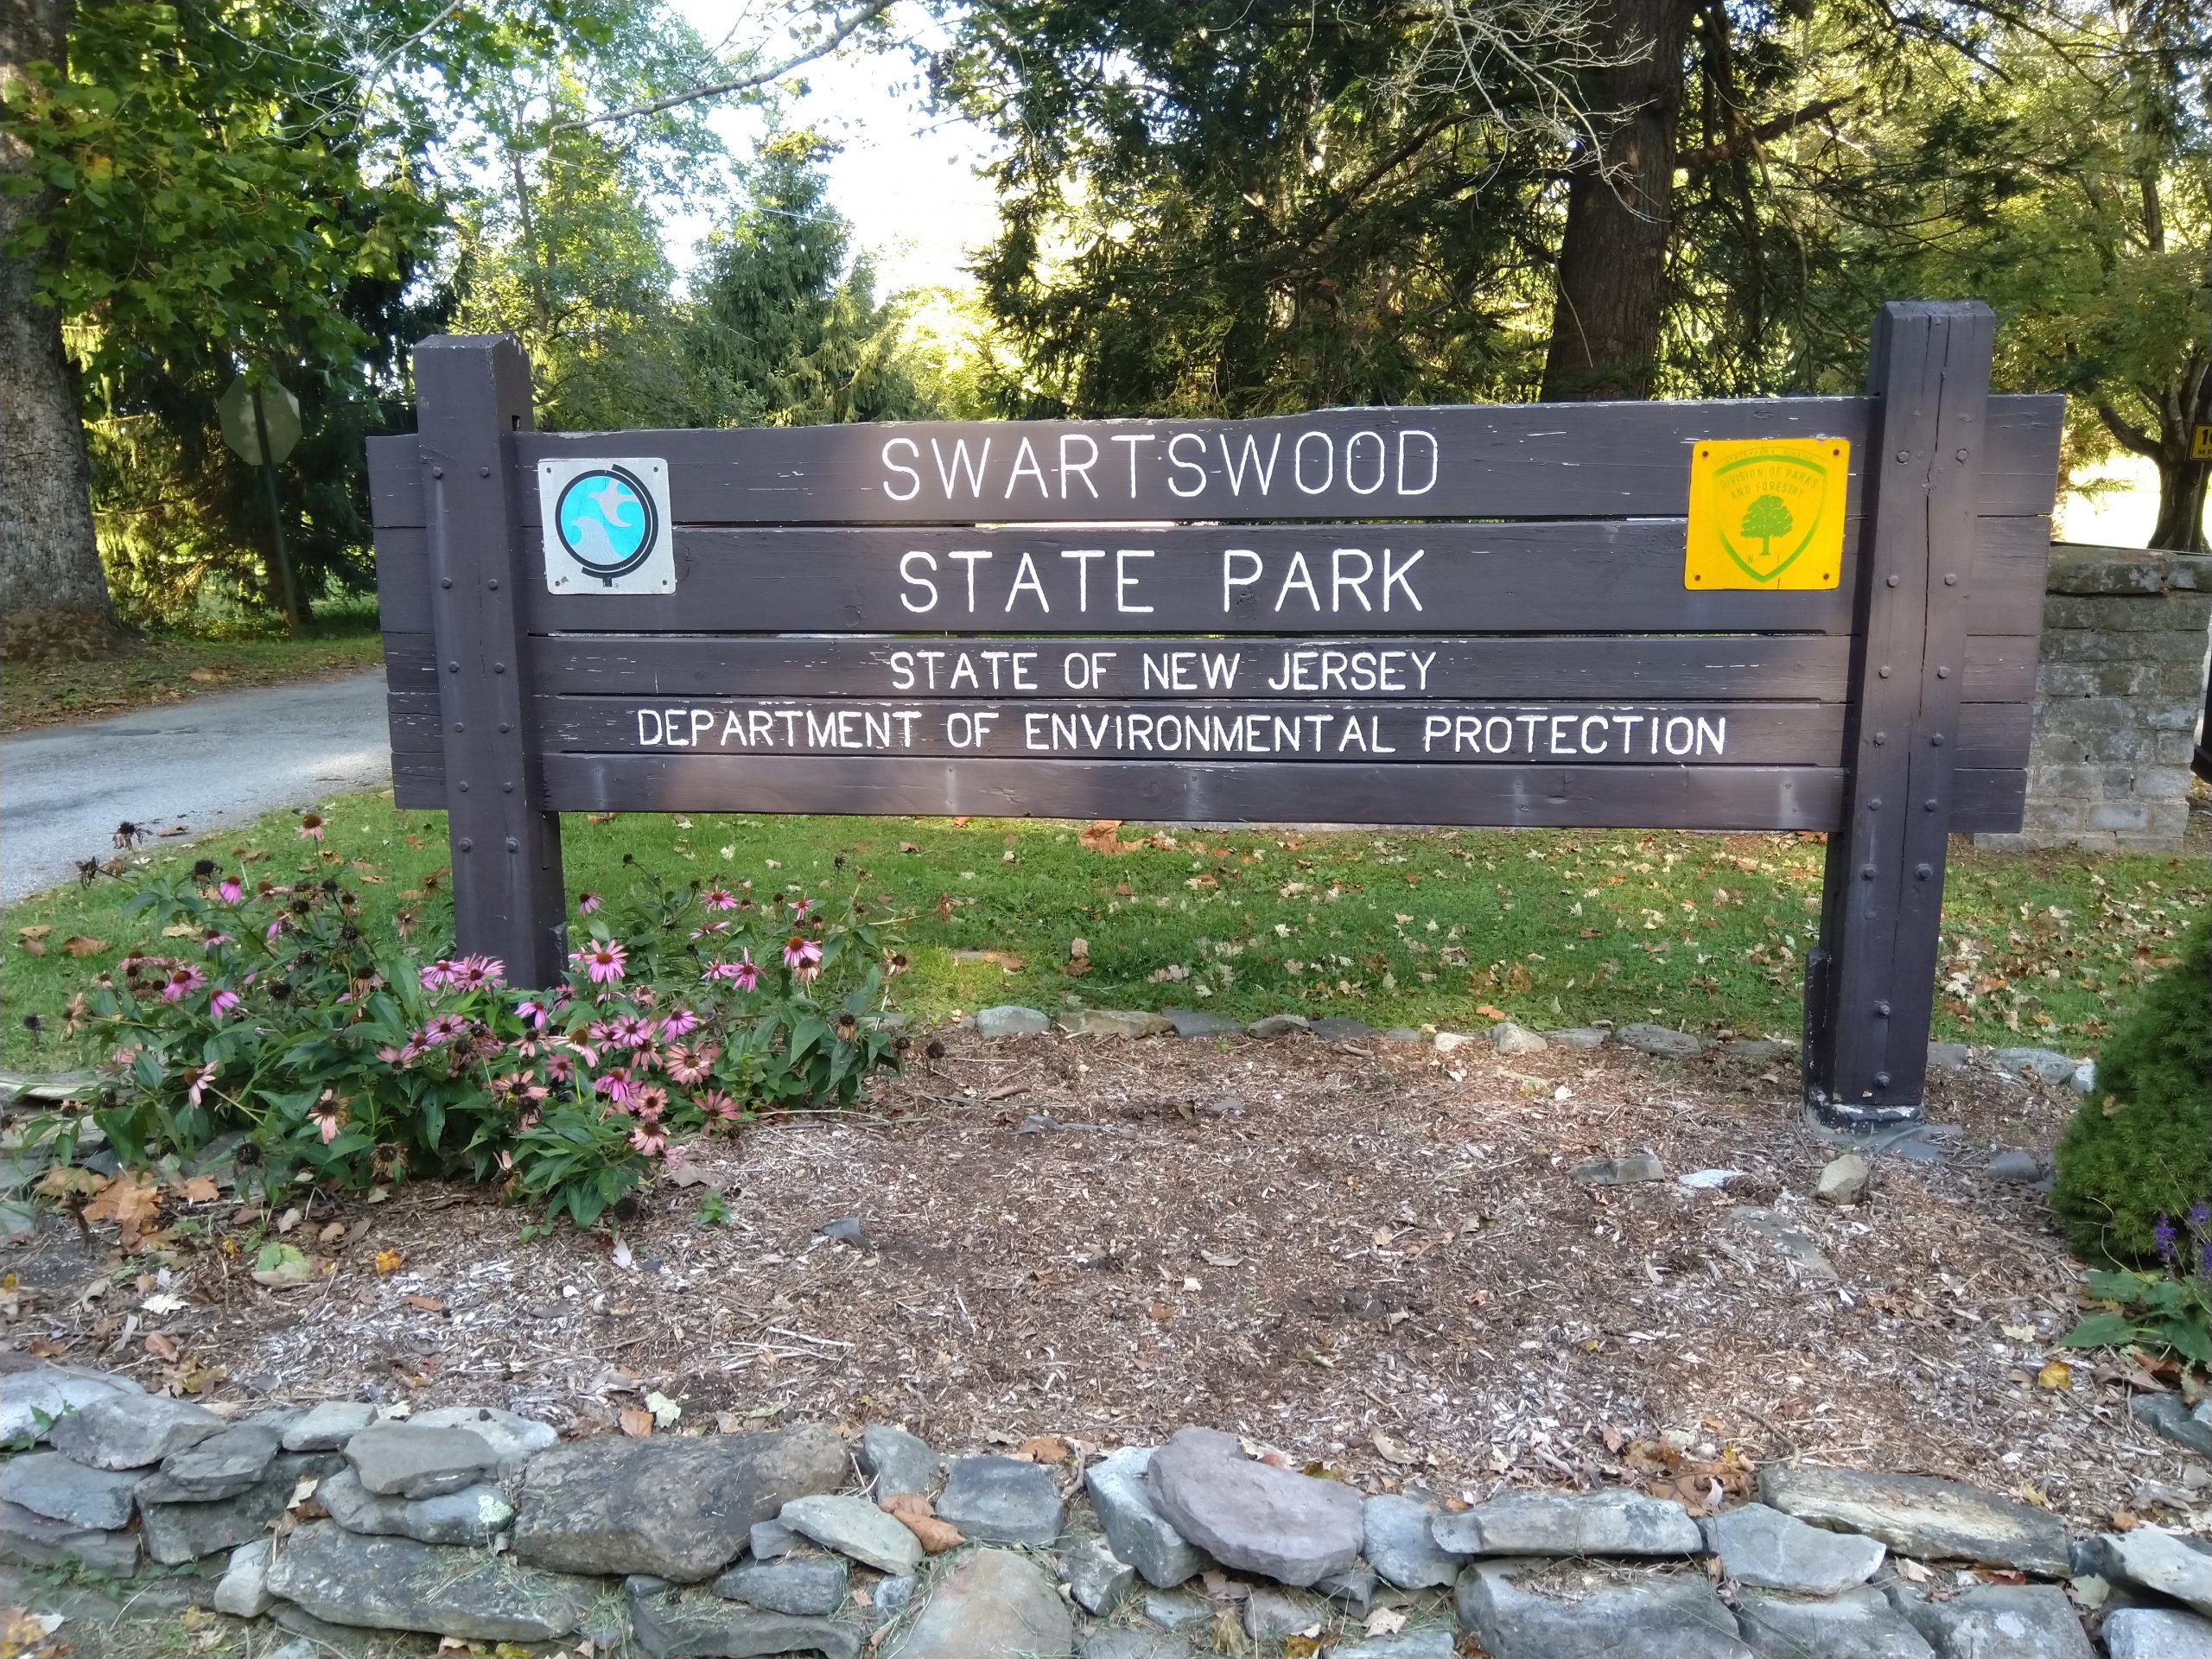 Camping at Swartswood State Park